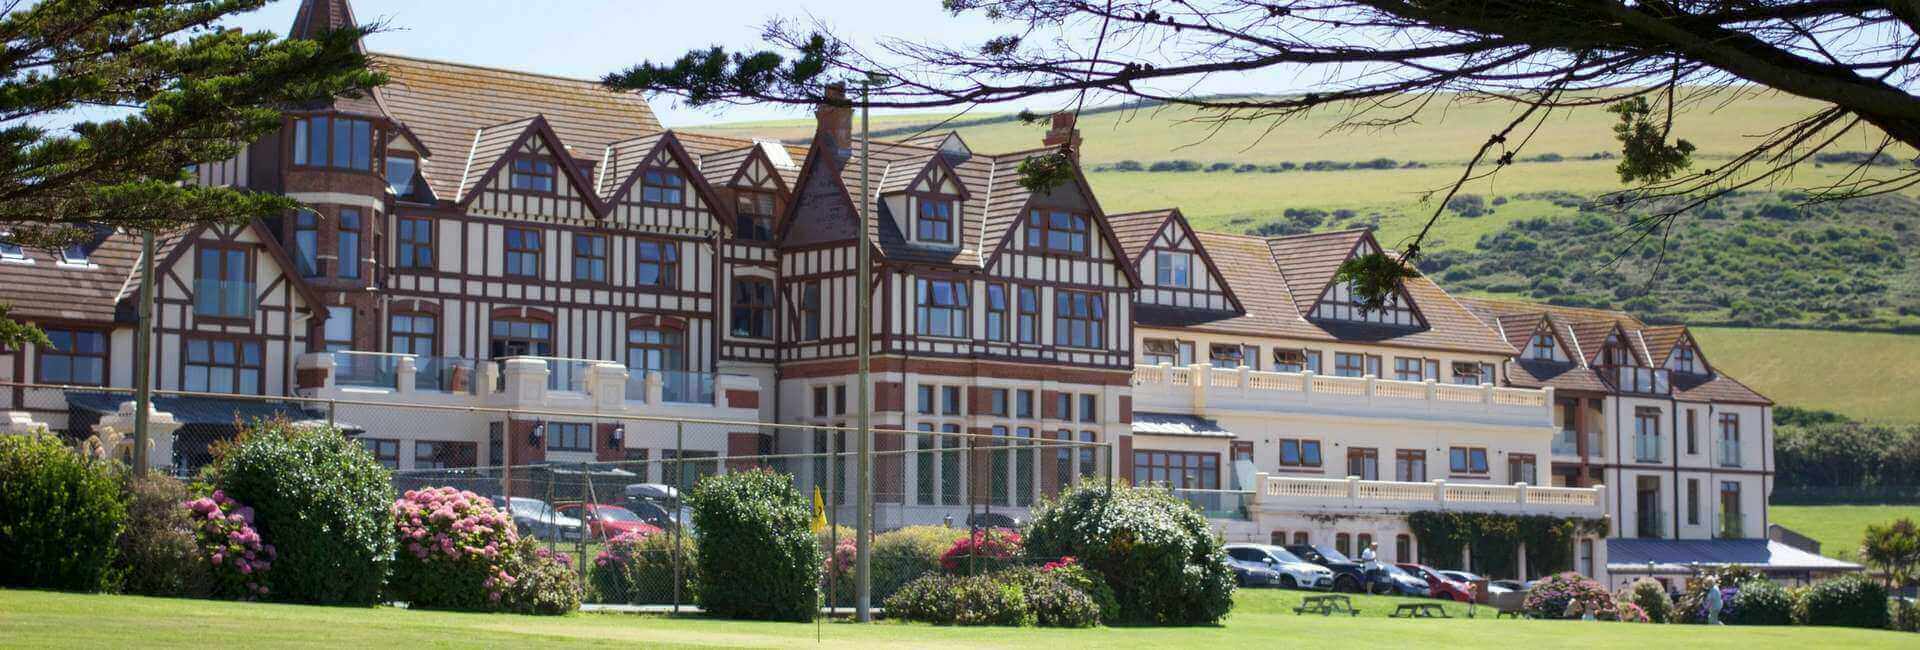 Best Dog-Friendly Hotel in Devon - Woolacombe Bay